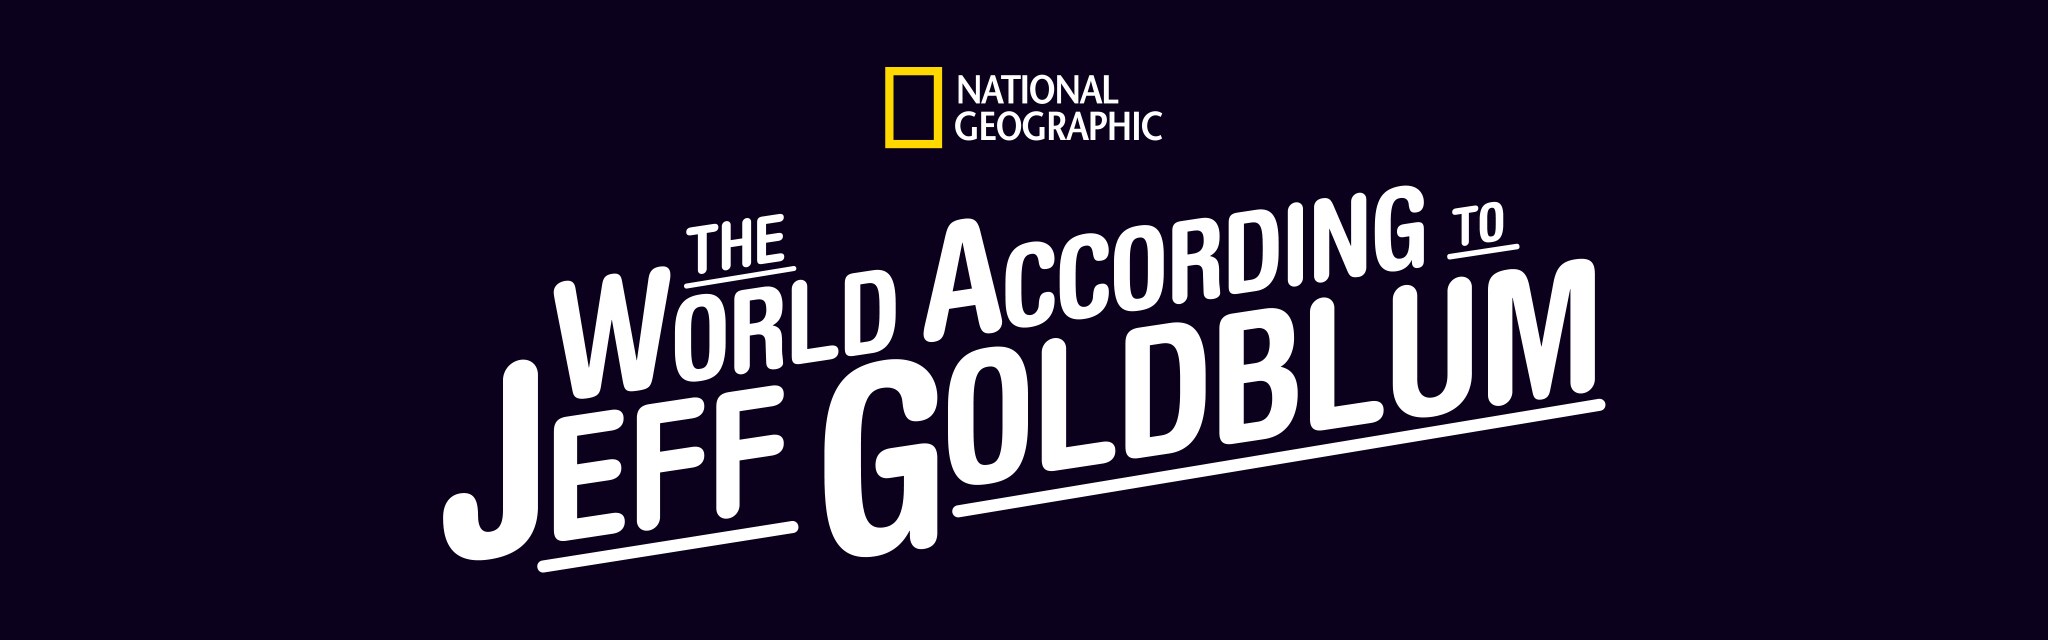 National Geographic | The World According to Jeff Goldblum